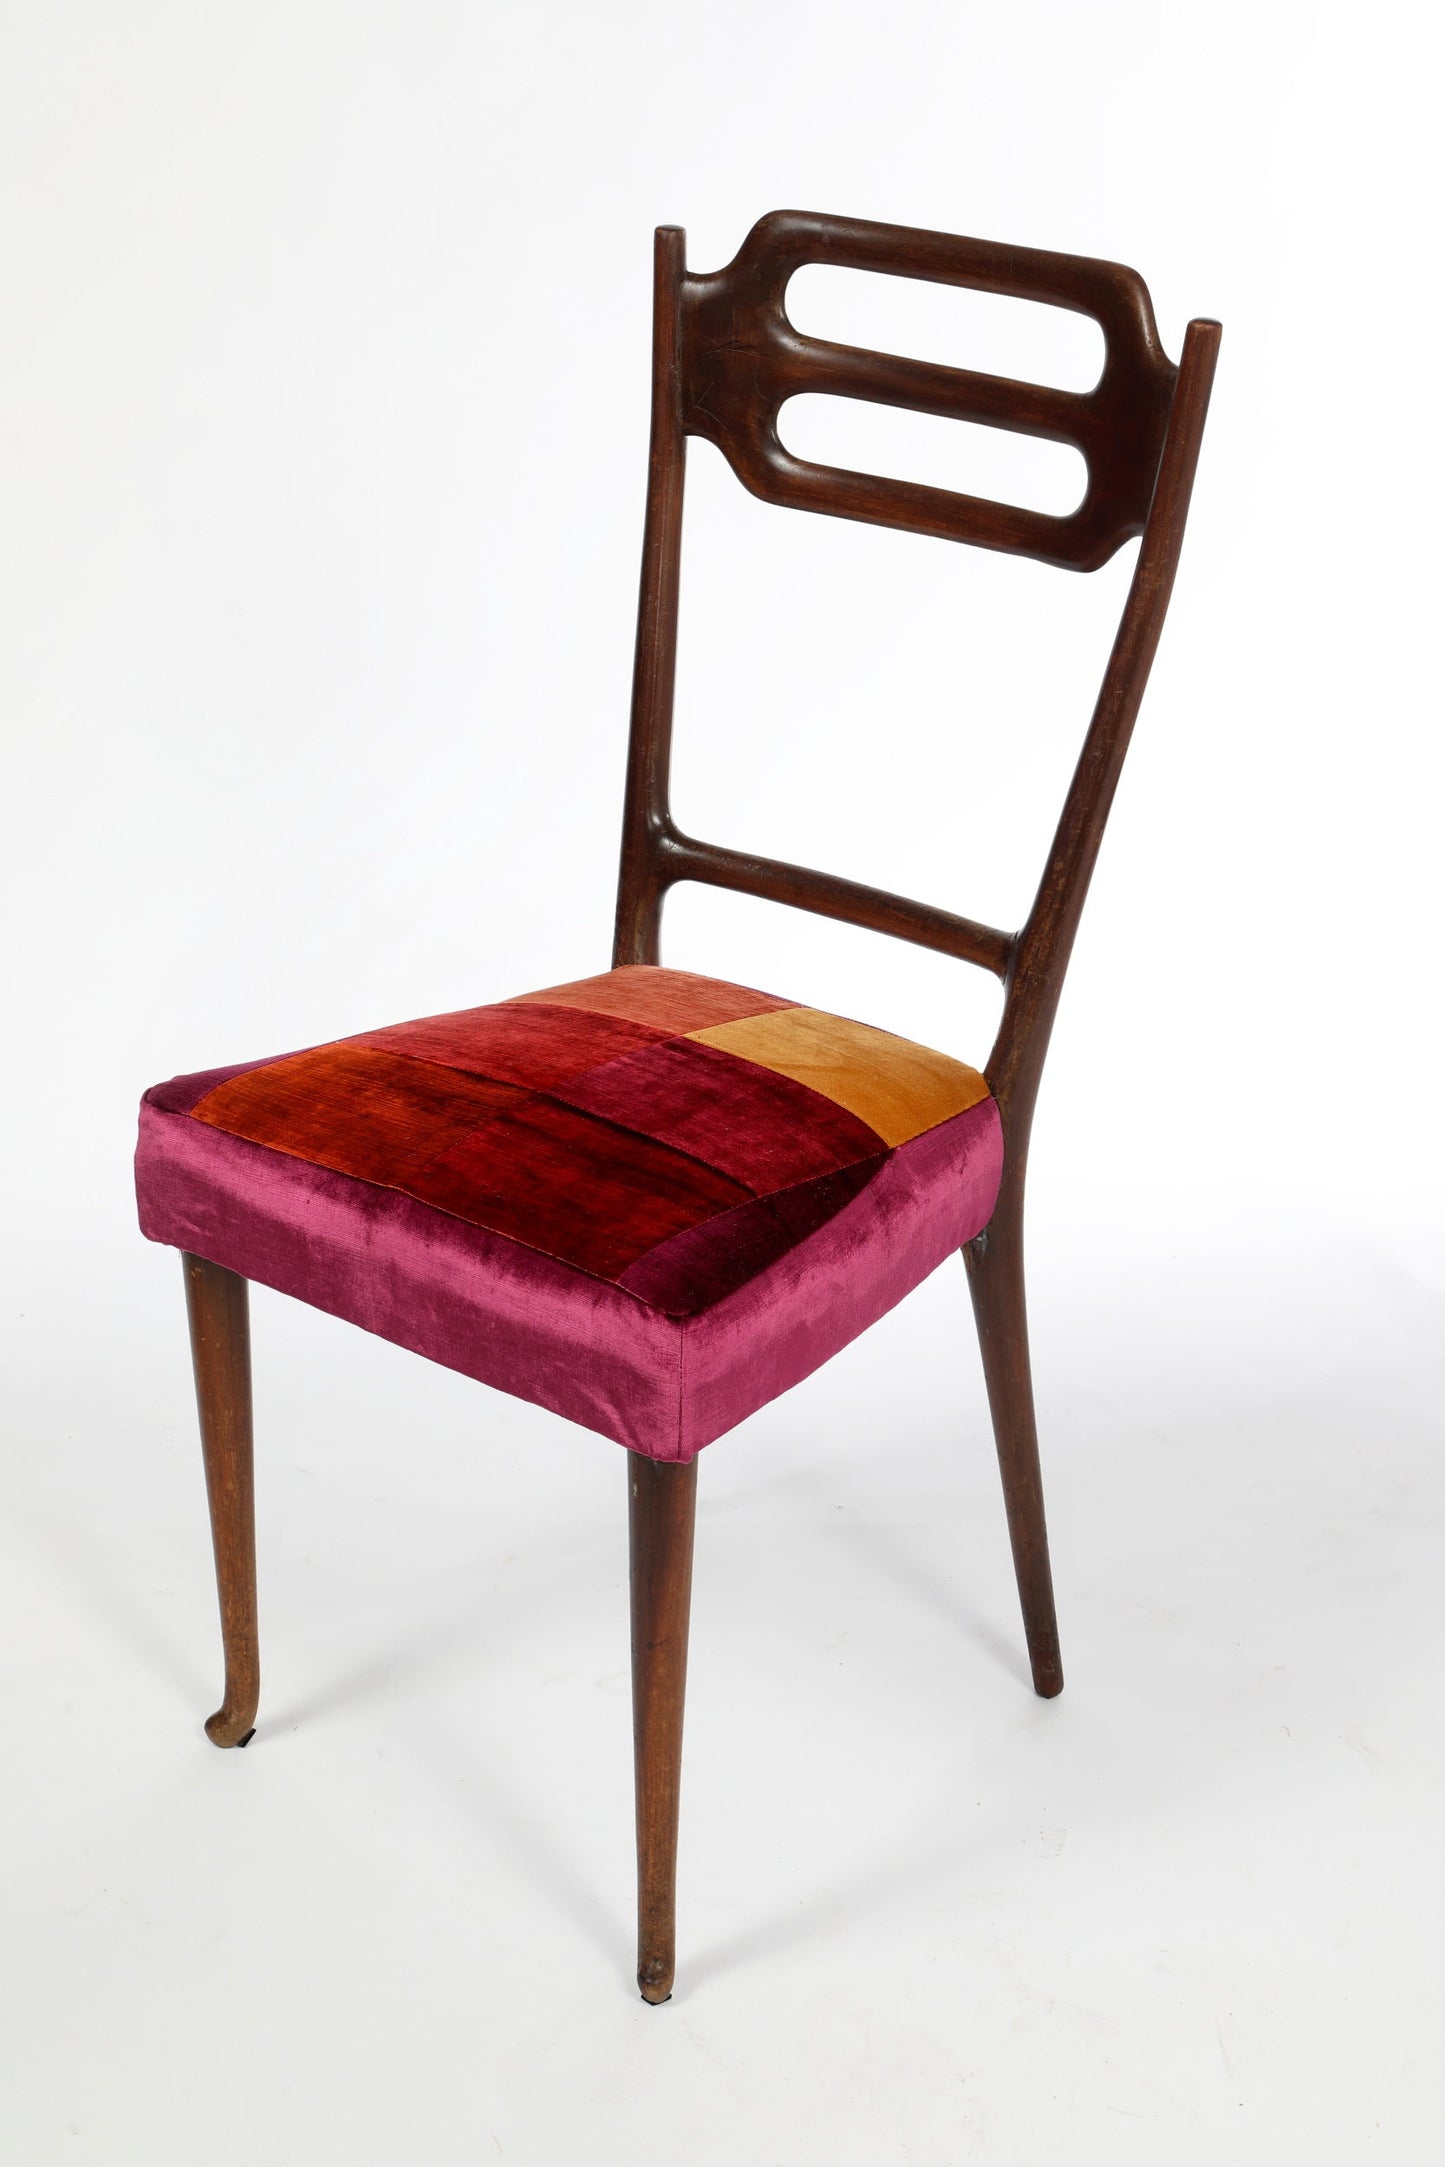 Pair of 1950s chairs reinterpreted by Triplef